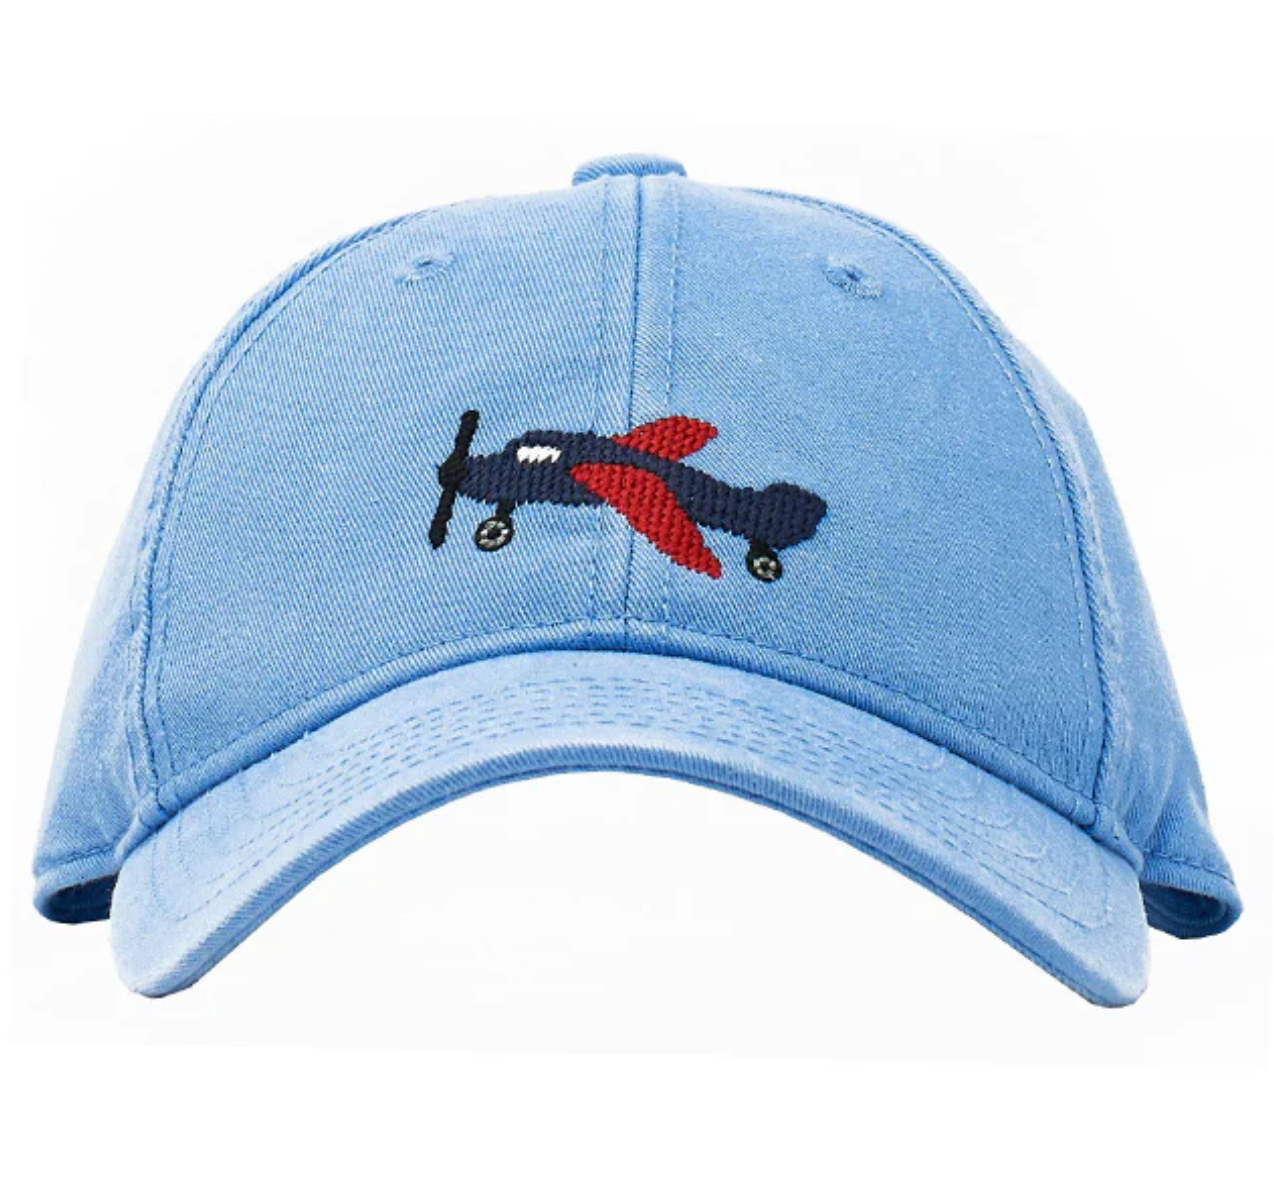 Airplane on Light Blue Hat